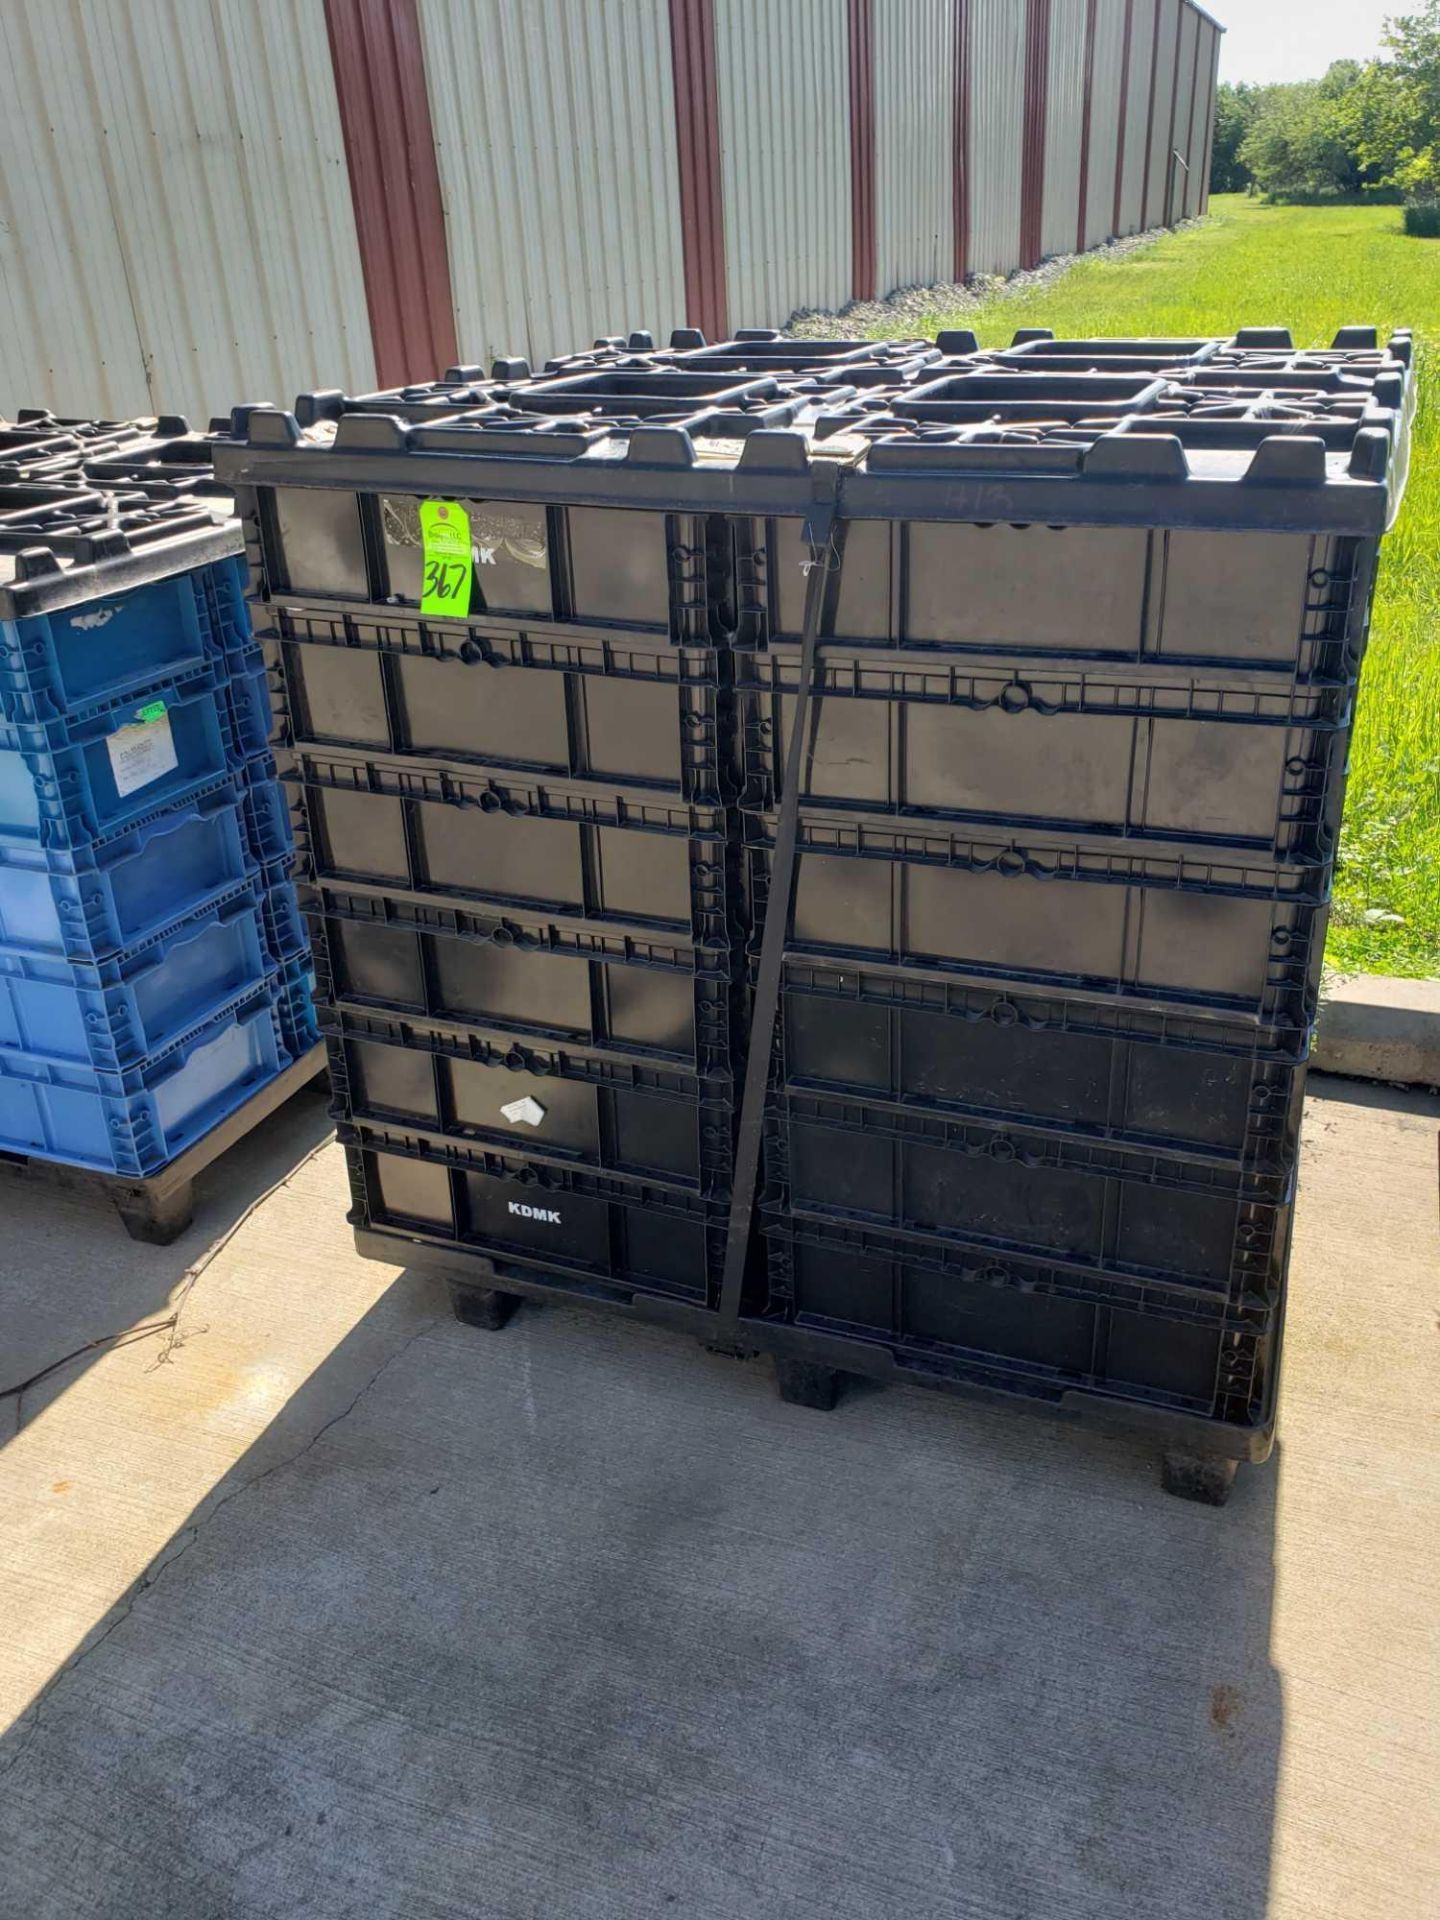 Qty 36 - plastic bins. 24" x 15" x 7" with pallet